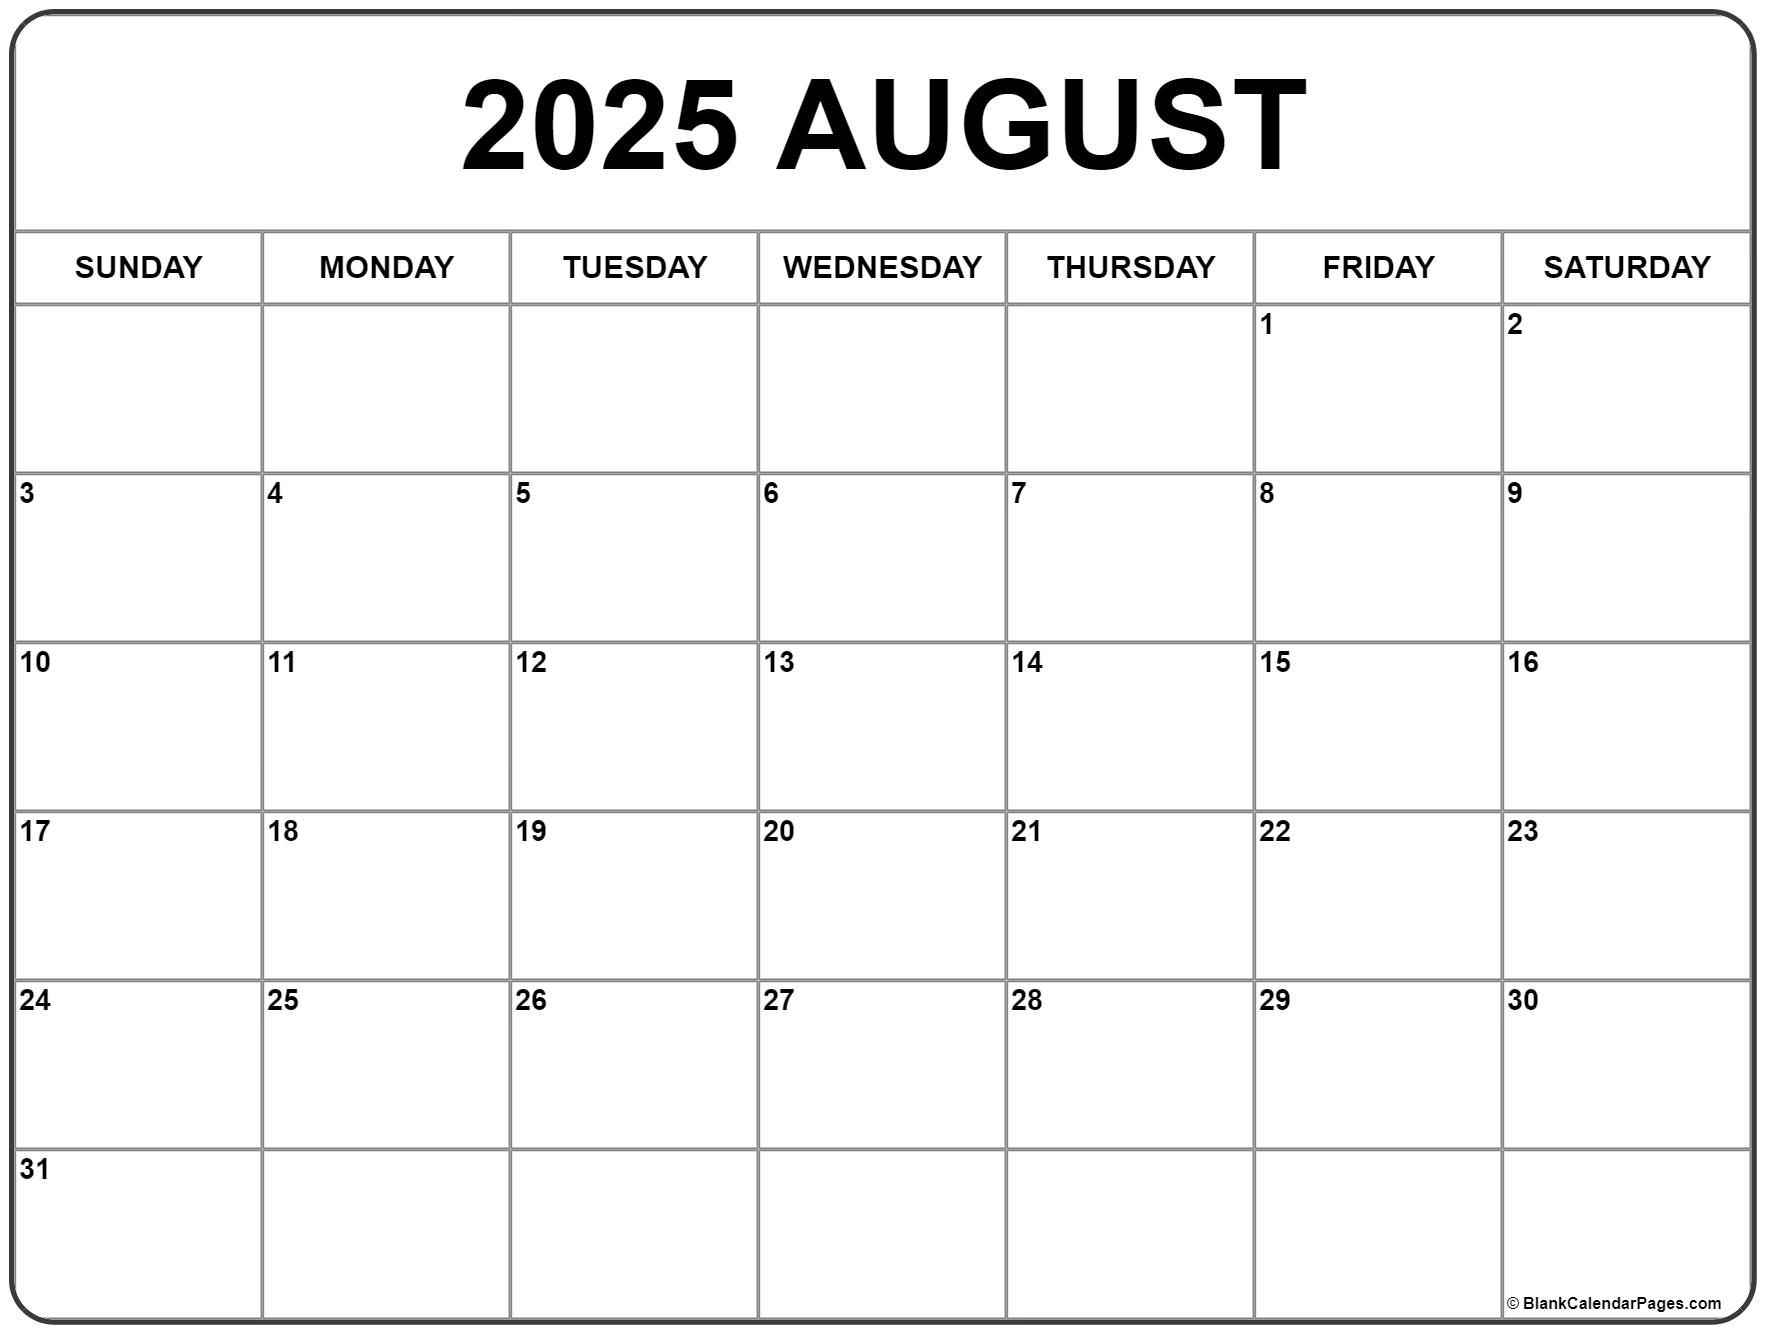 August 2025 Calendar | Free Printable Calendar inside 2025 August Calendar